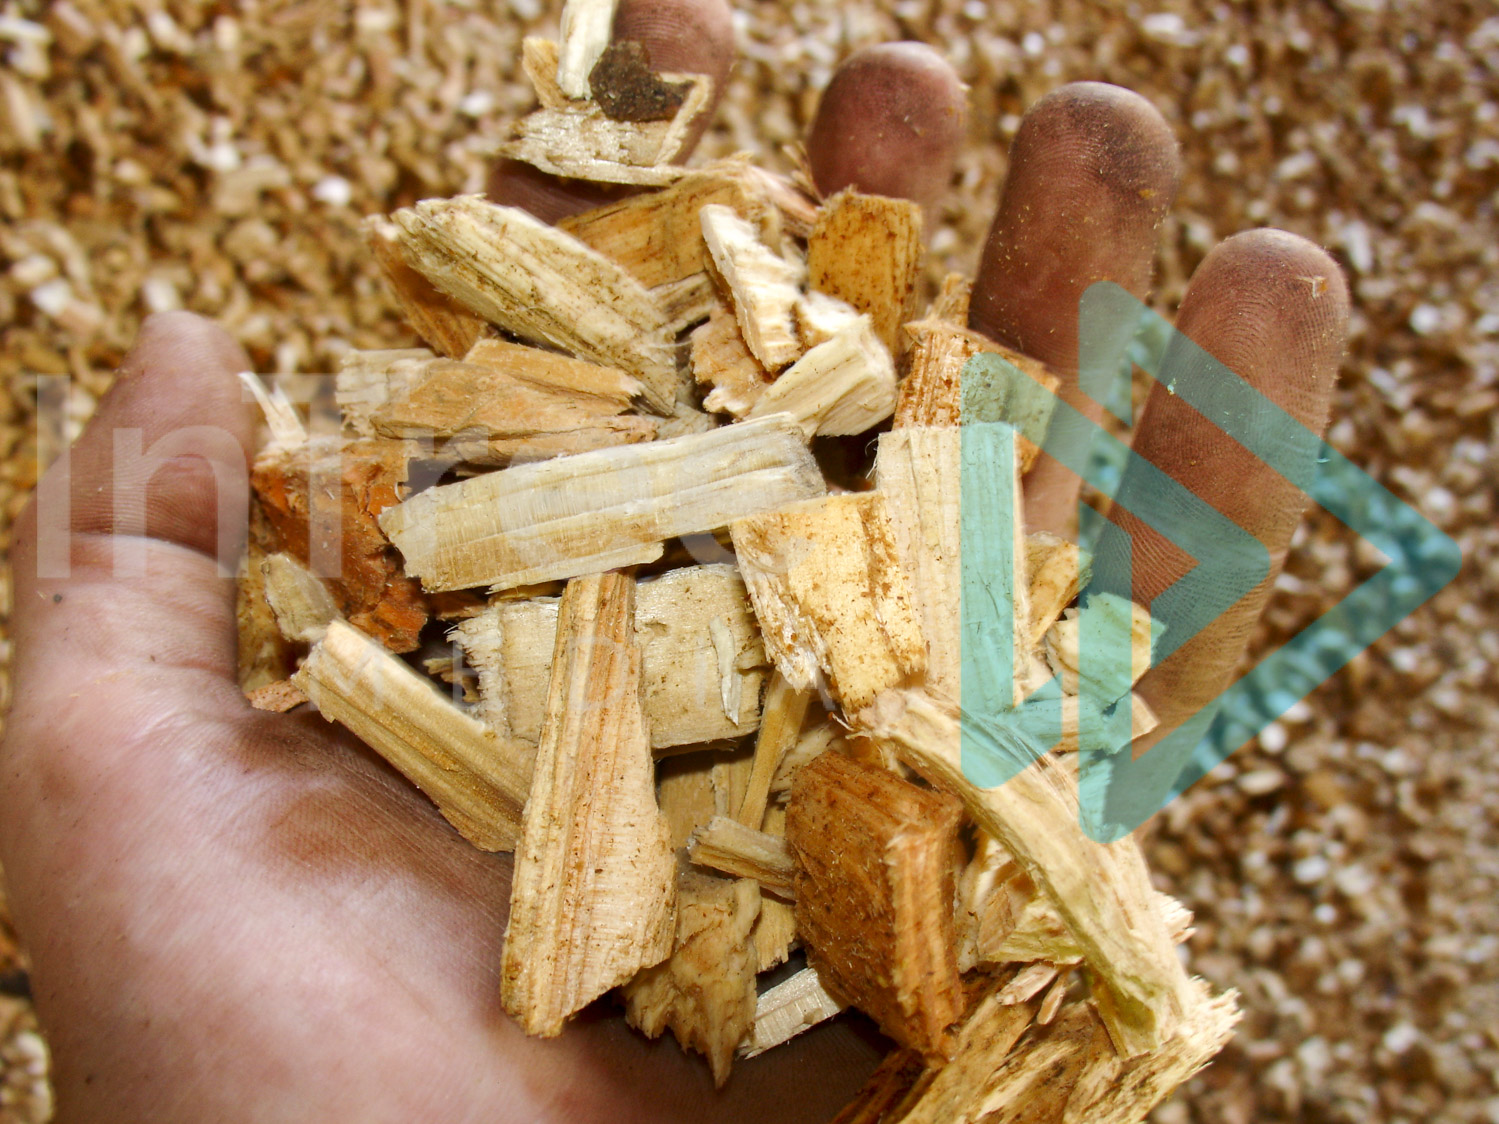 woodchip in a hand - Arborist Stock Photo 001-21-00051